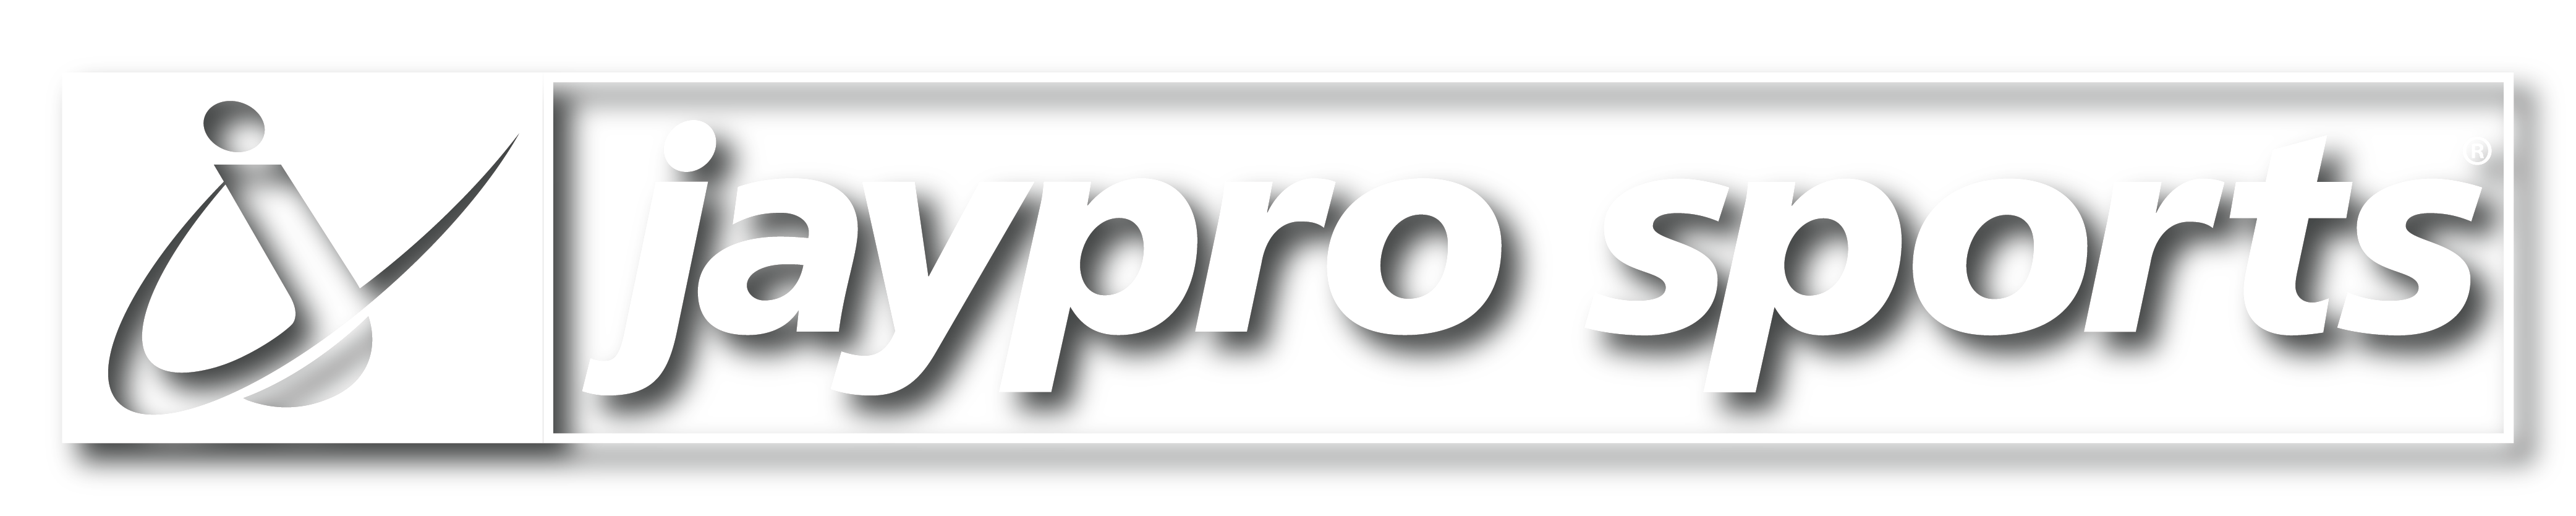 Jaypro Sports logo